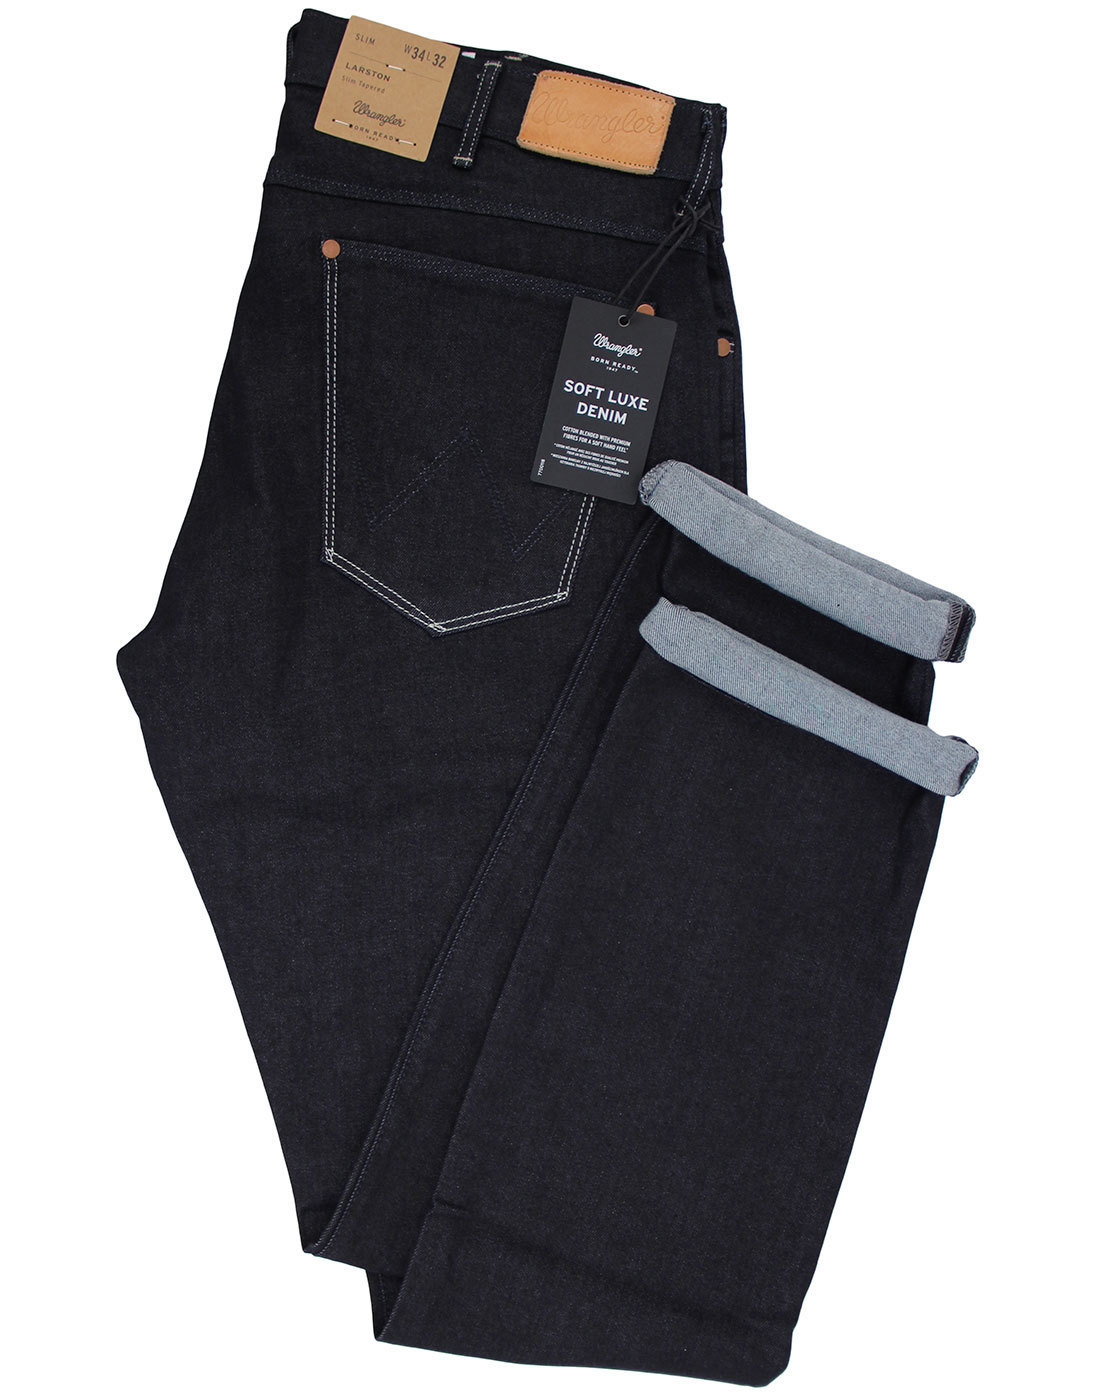 WRANGLER Larston Retro Mod Slim Tapered Soft Luxe Denim Jeans